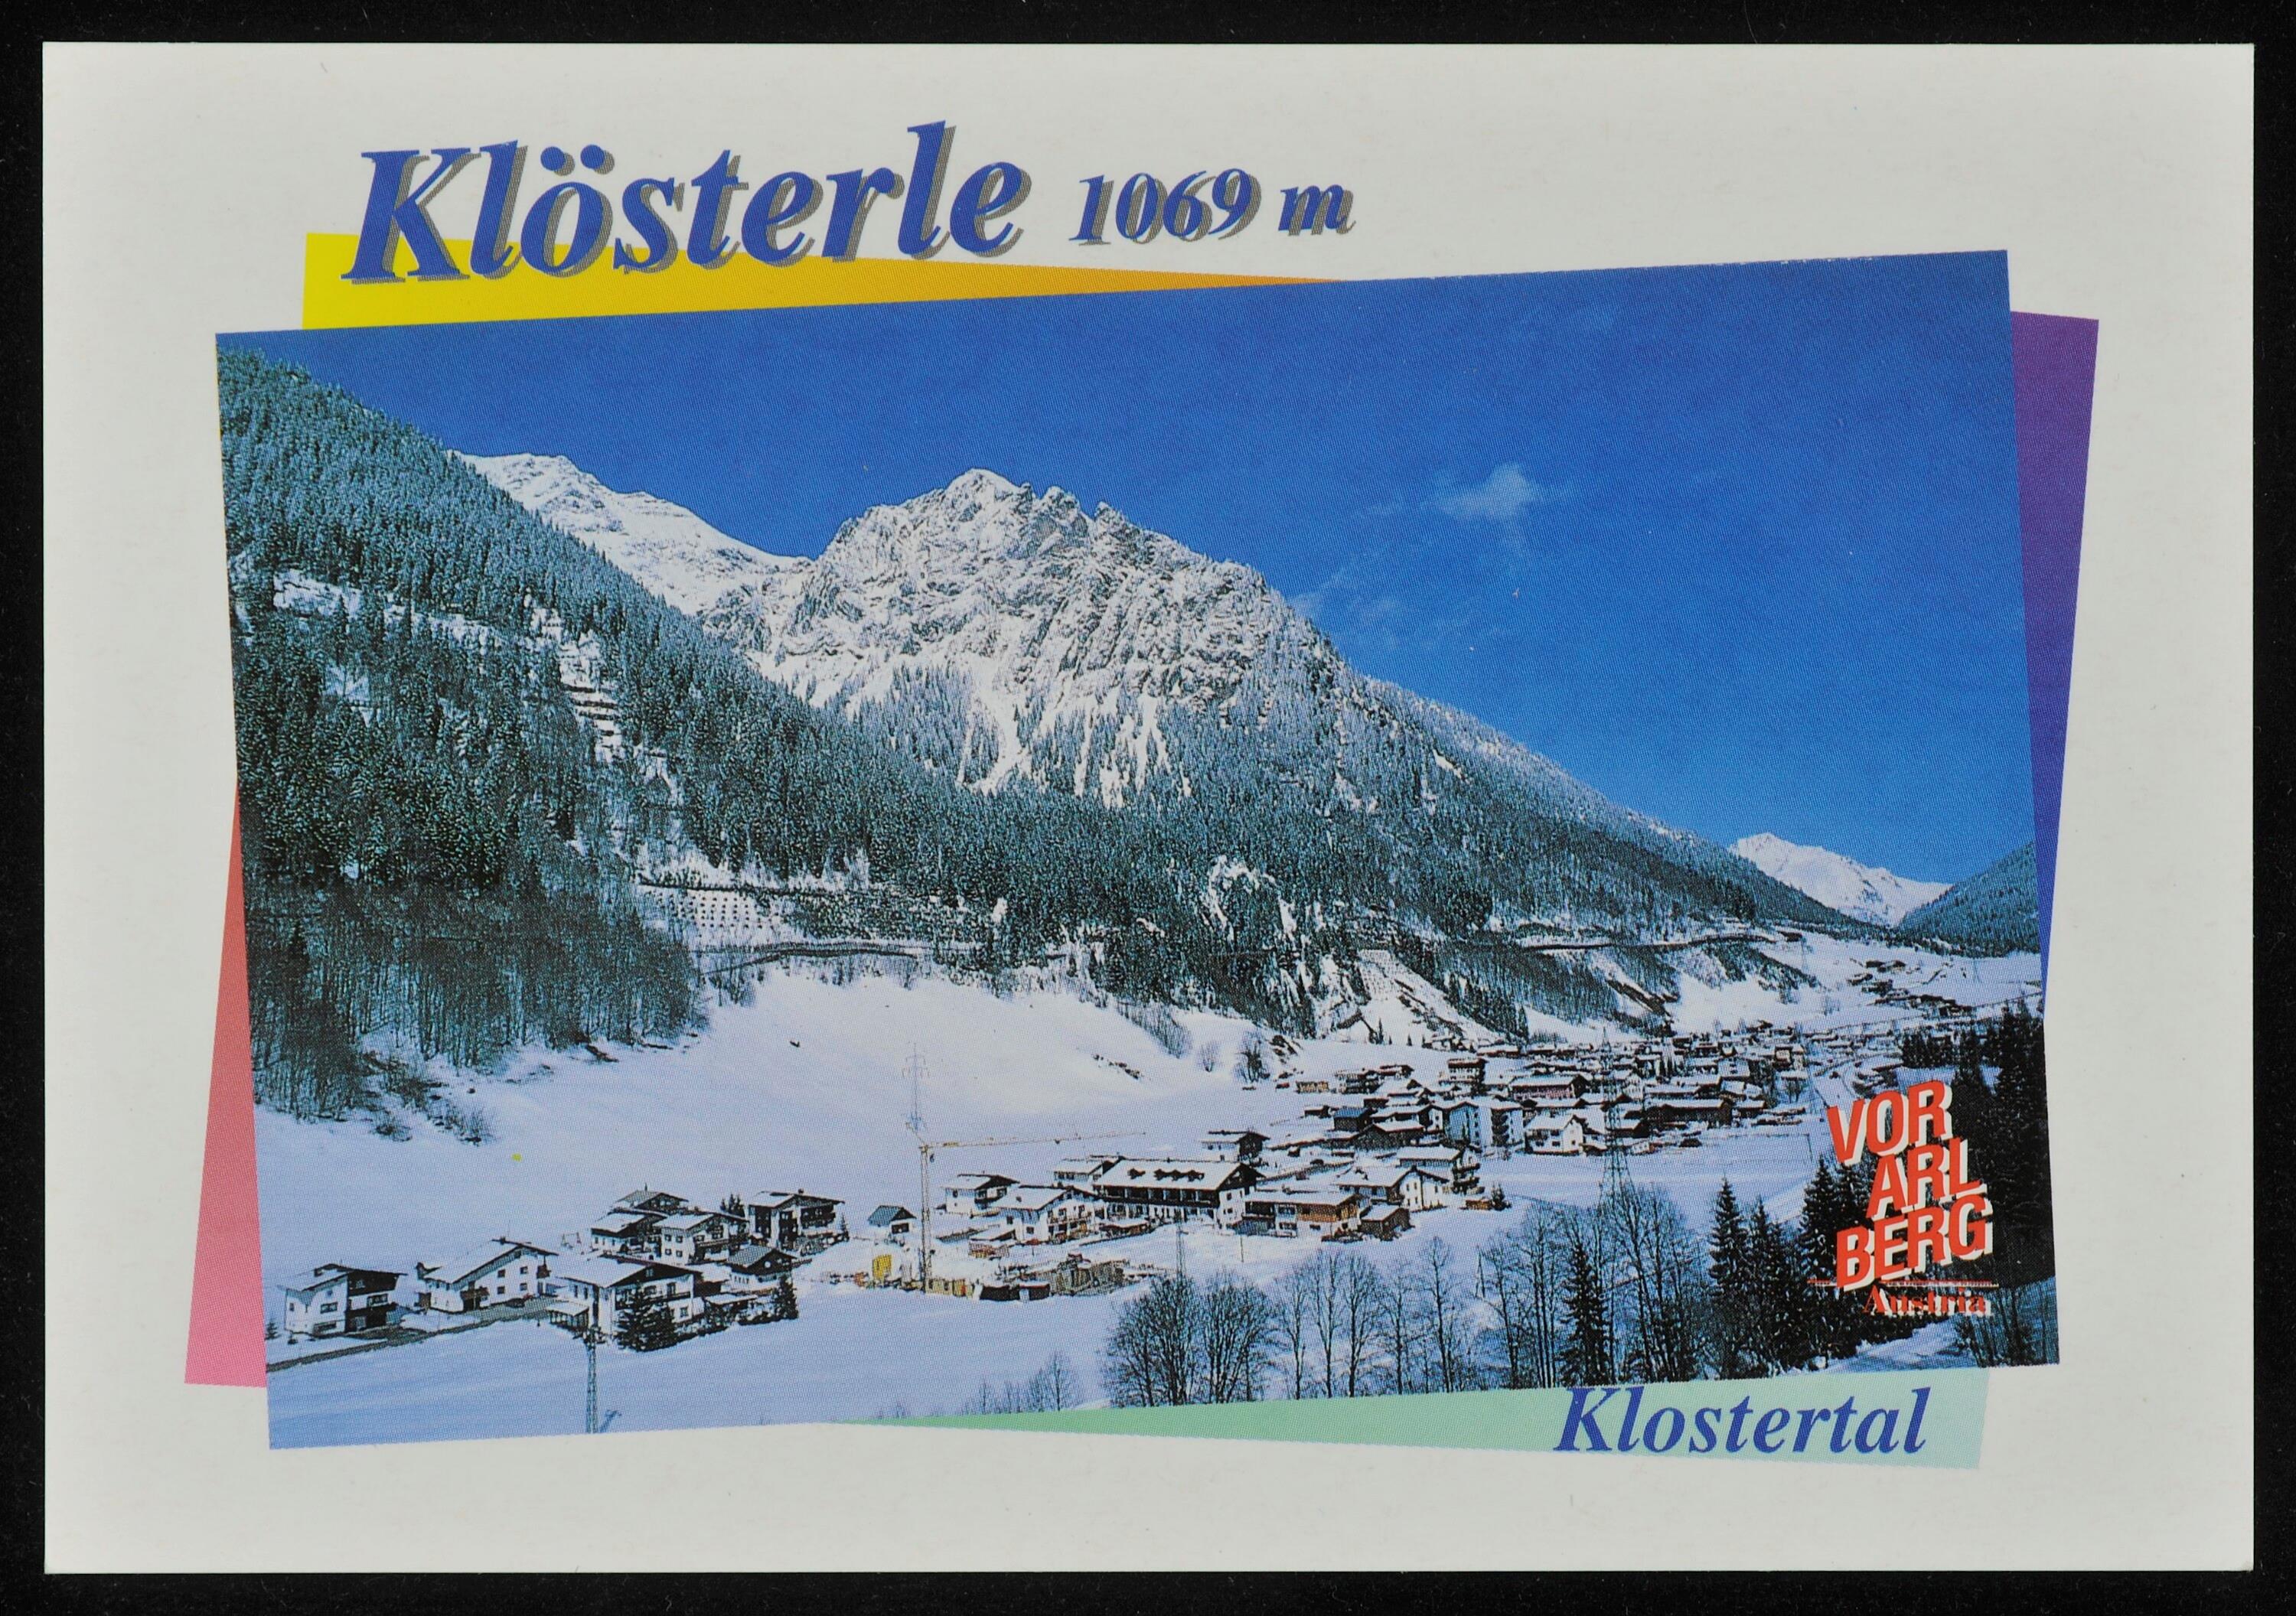 Klösterle 1069 m Klostertal Vorarlberg Austria></div>


    <hr>
    <div class=